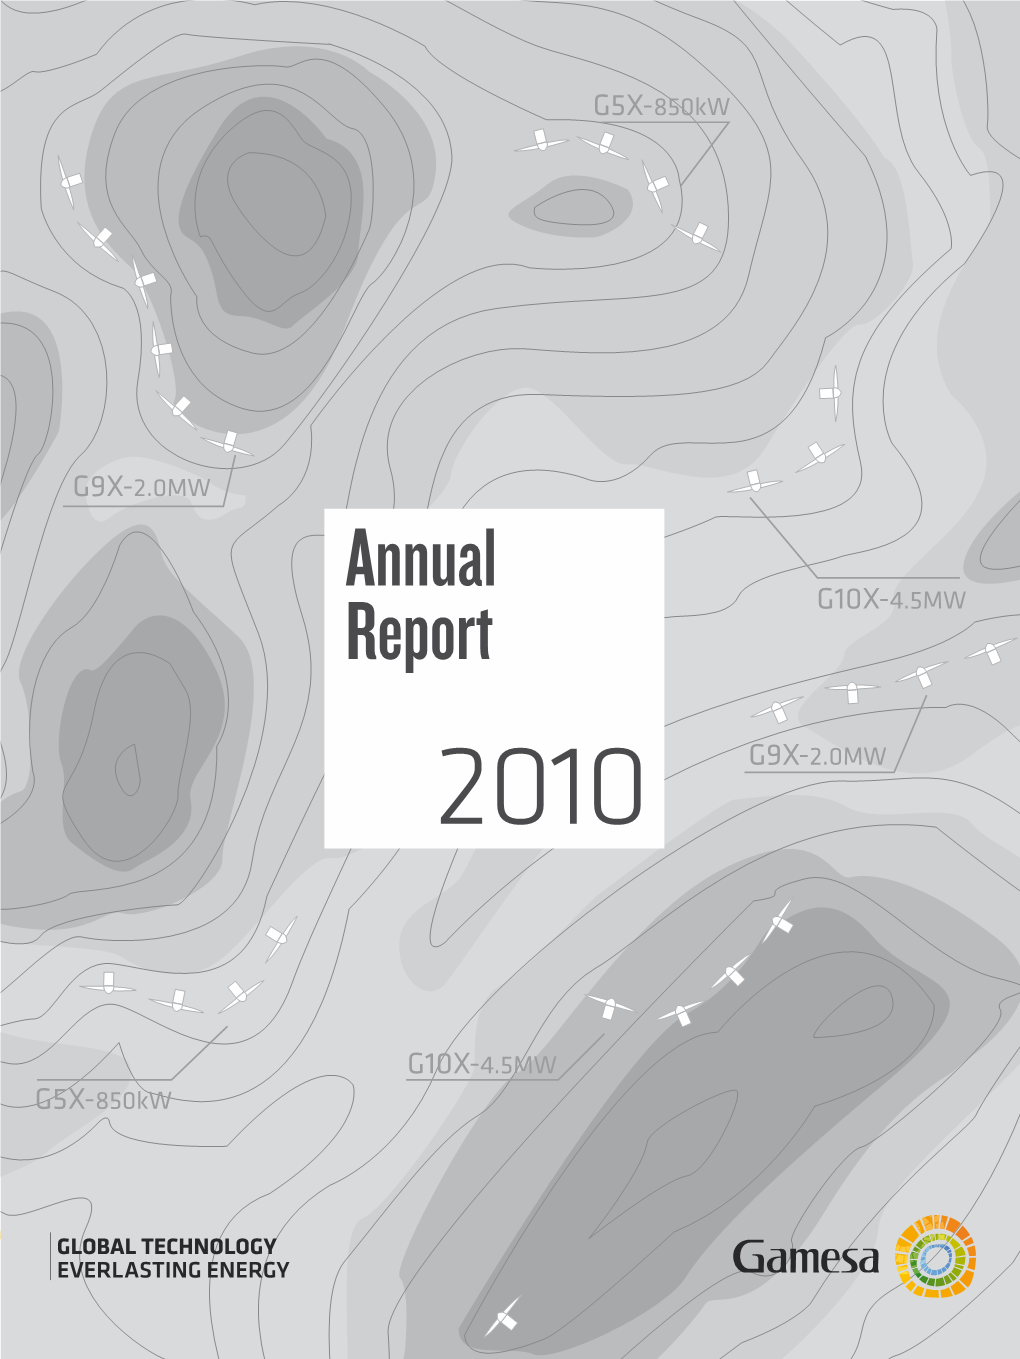 Annual Report G10X-4.5MW a Nnual Report 2010 2010 G9X-2.0MW